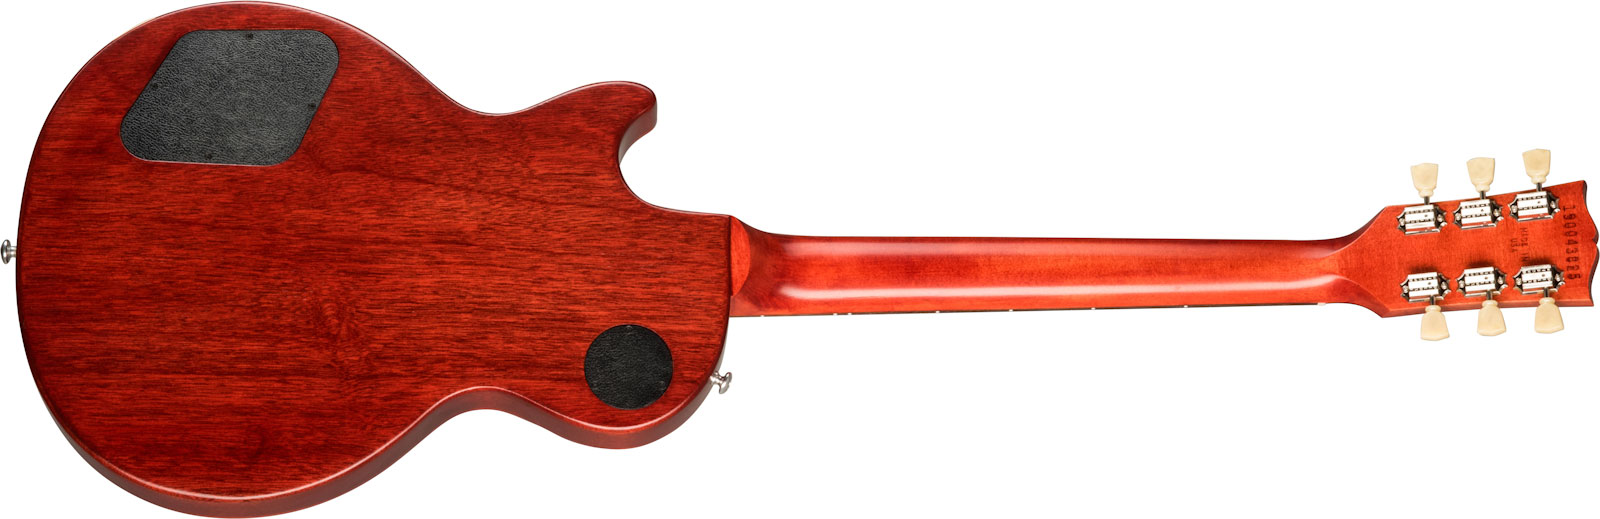 Gibson Les Paul Tribute Modern 2h Ht Rw - Satin Iced Tea - Single cut electric guitar - Variation 1